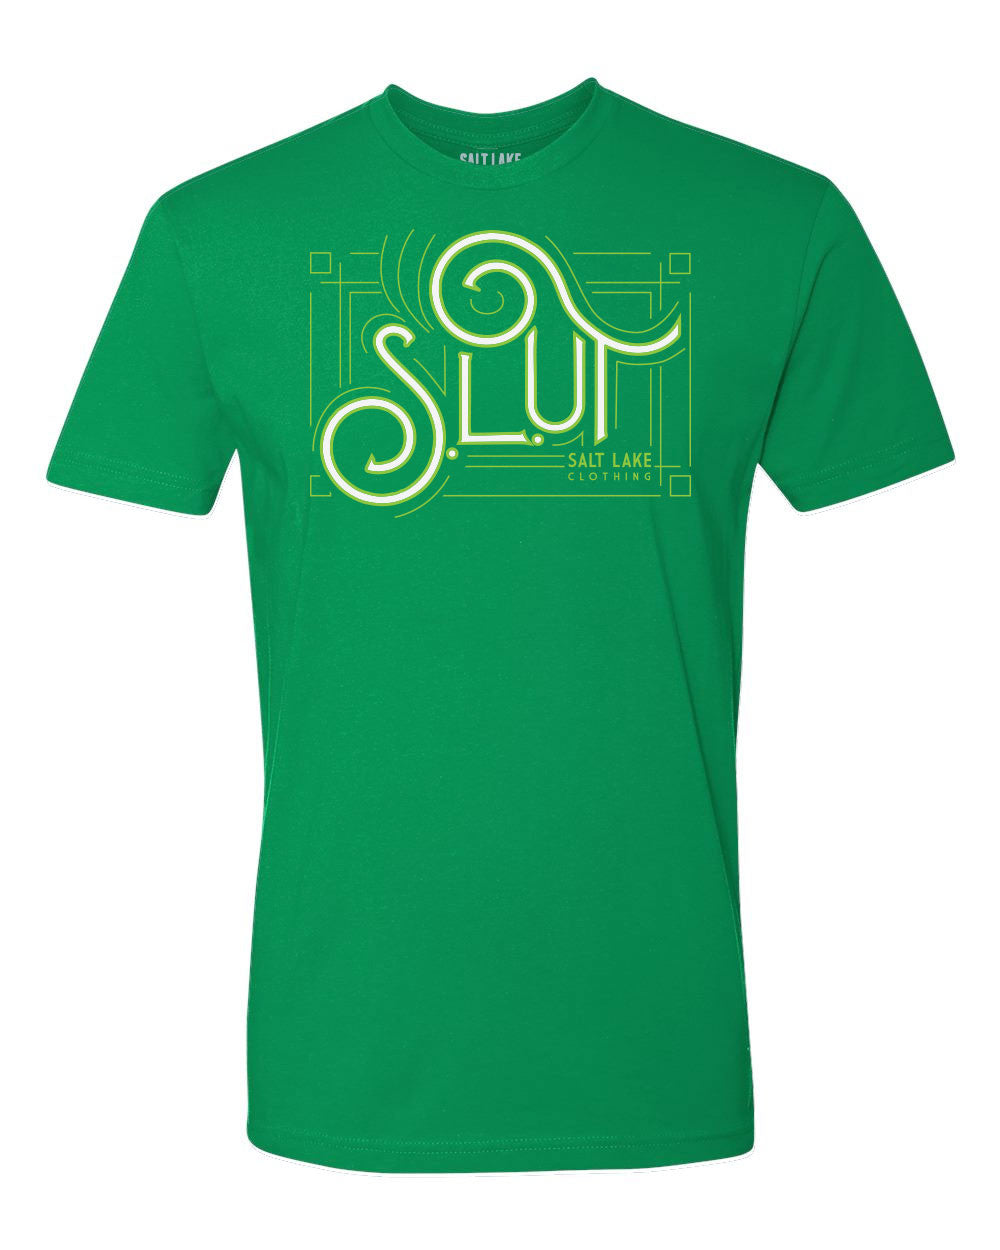 S.L.UT Deco T-shirt